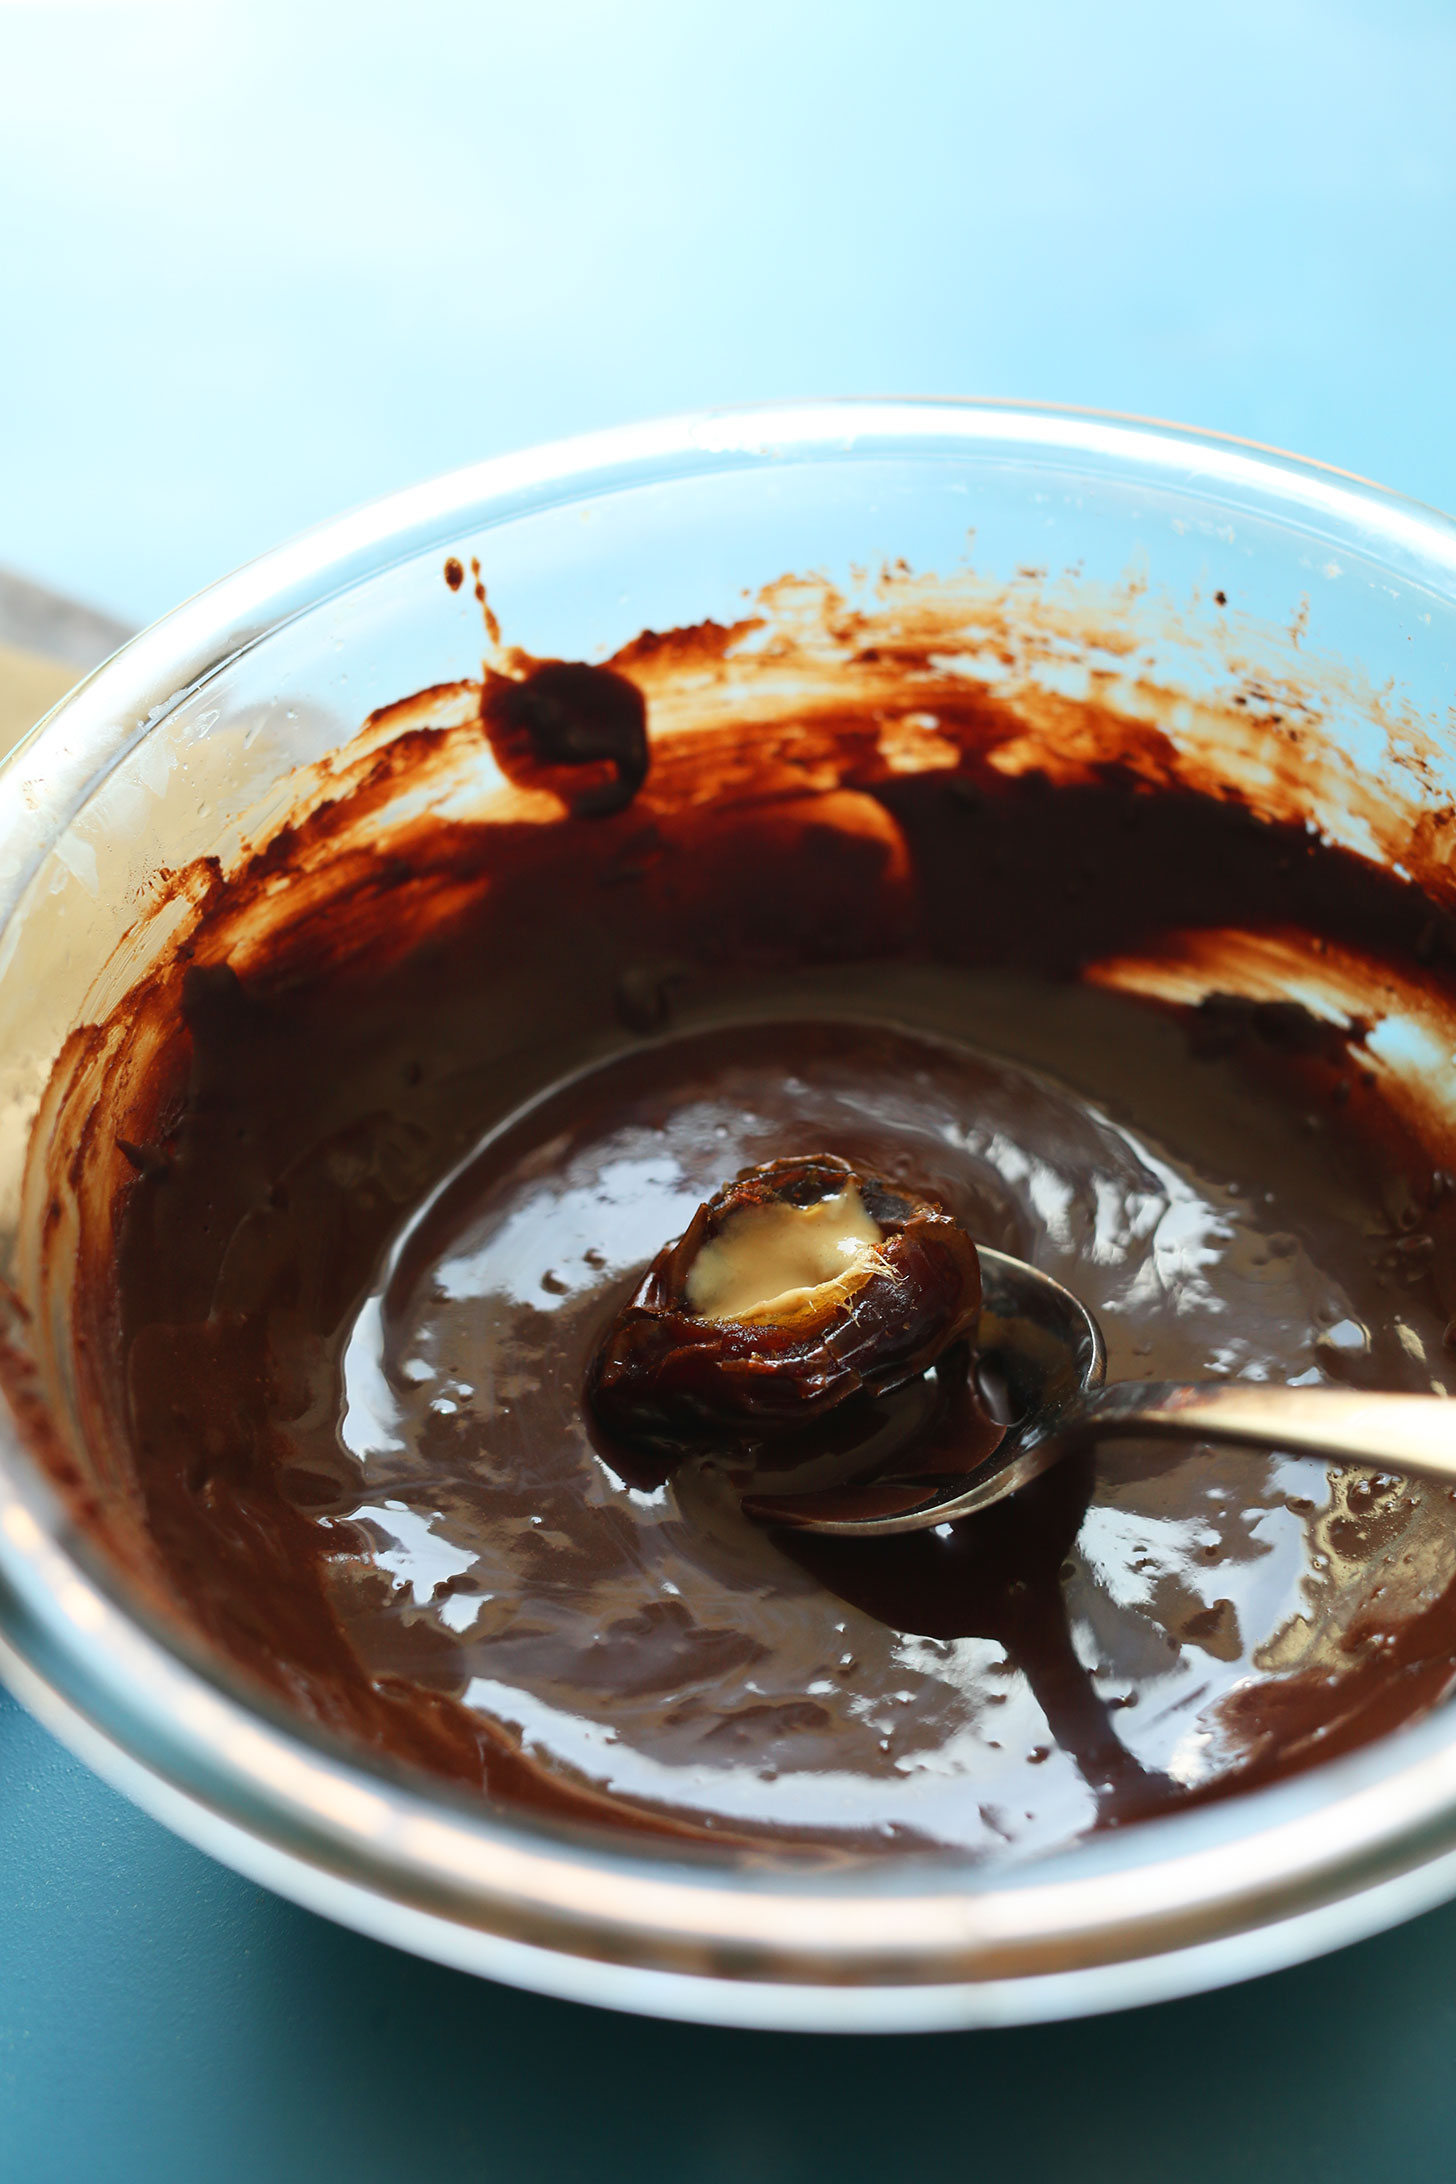 Dipping a Tahini-Stuffed Date in homemade vegan dark chocolate for an easy dessert recipe